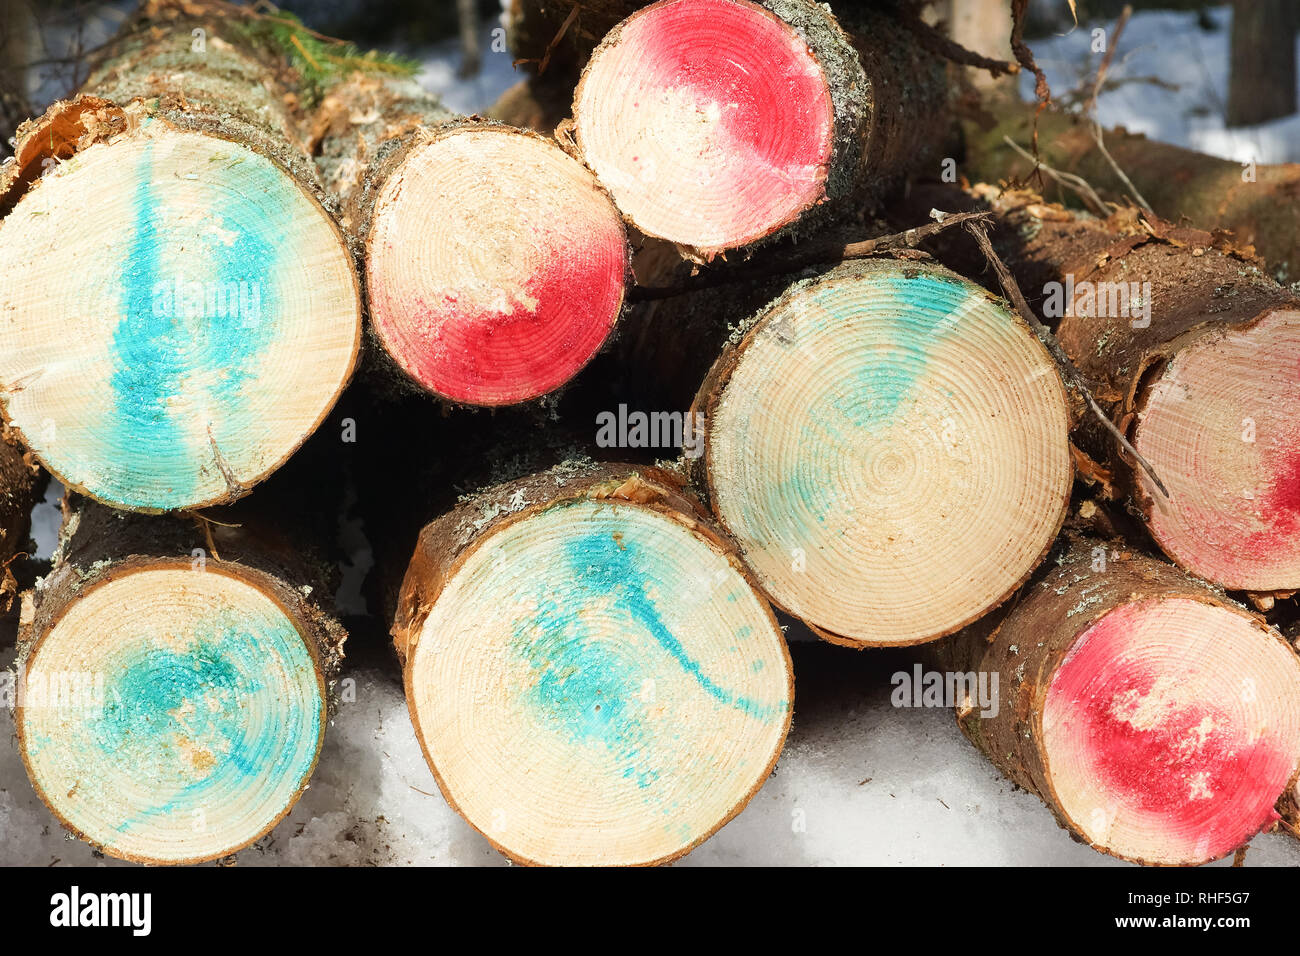 wood industry pulpwood Stock Photo